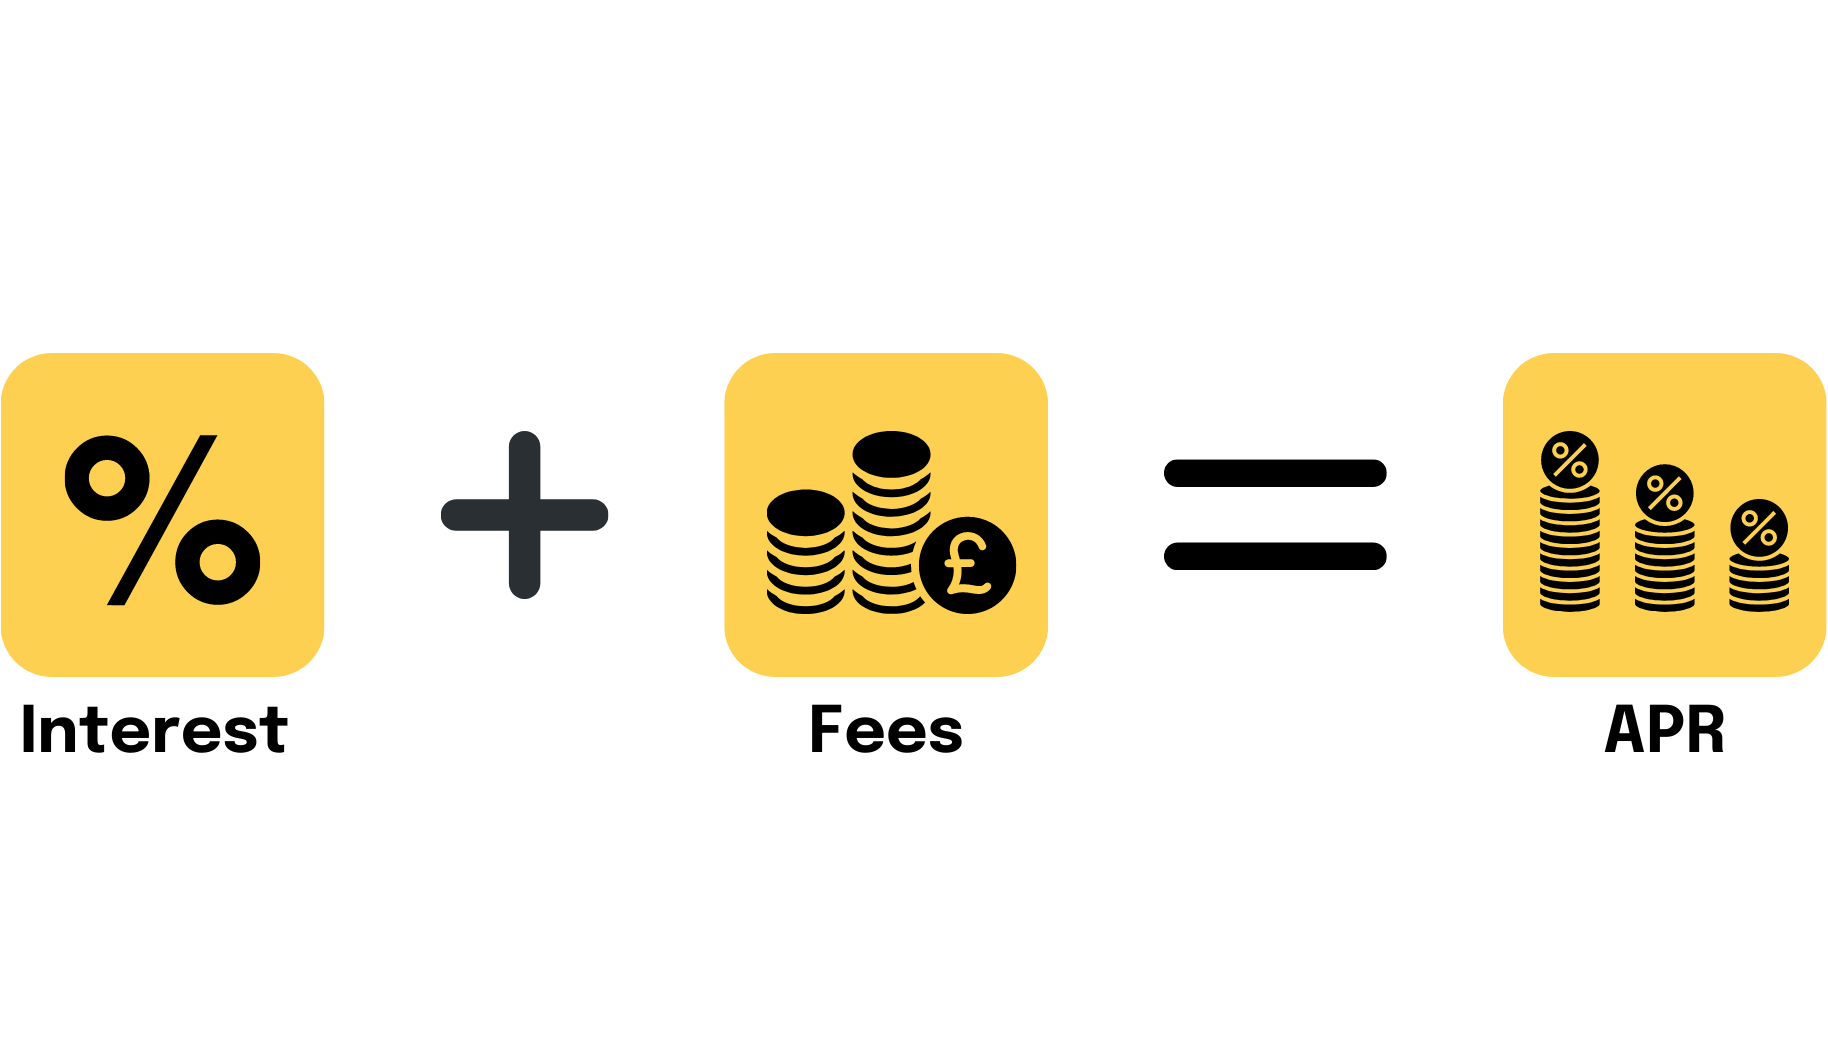 Interest + fees = APR